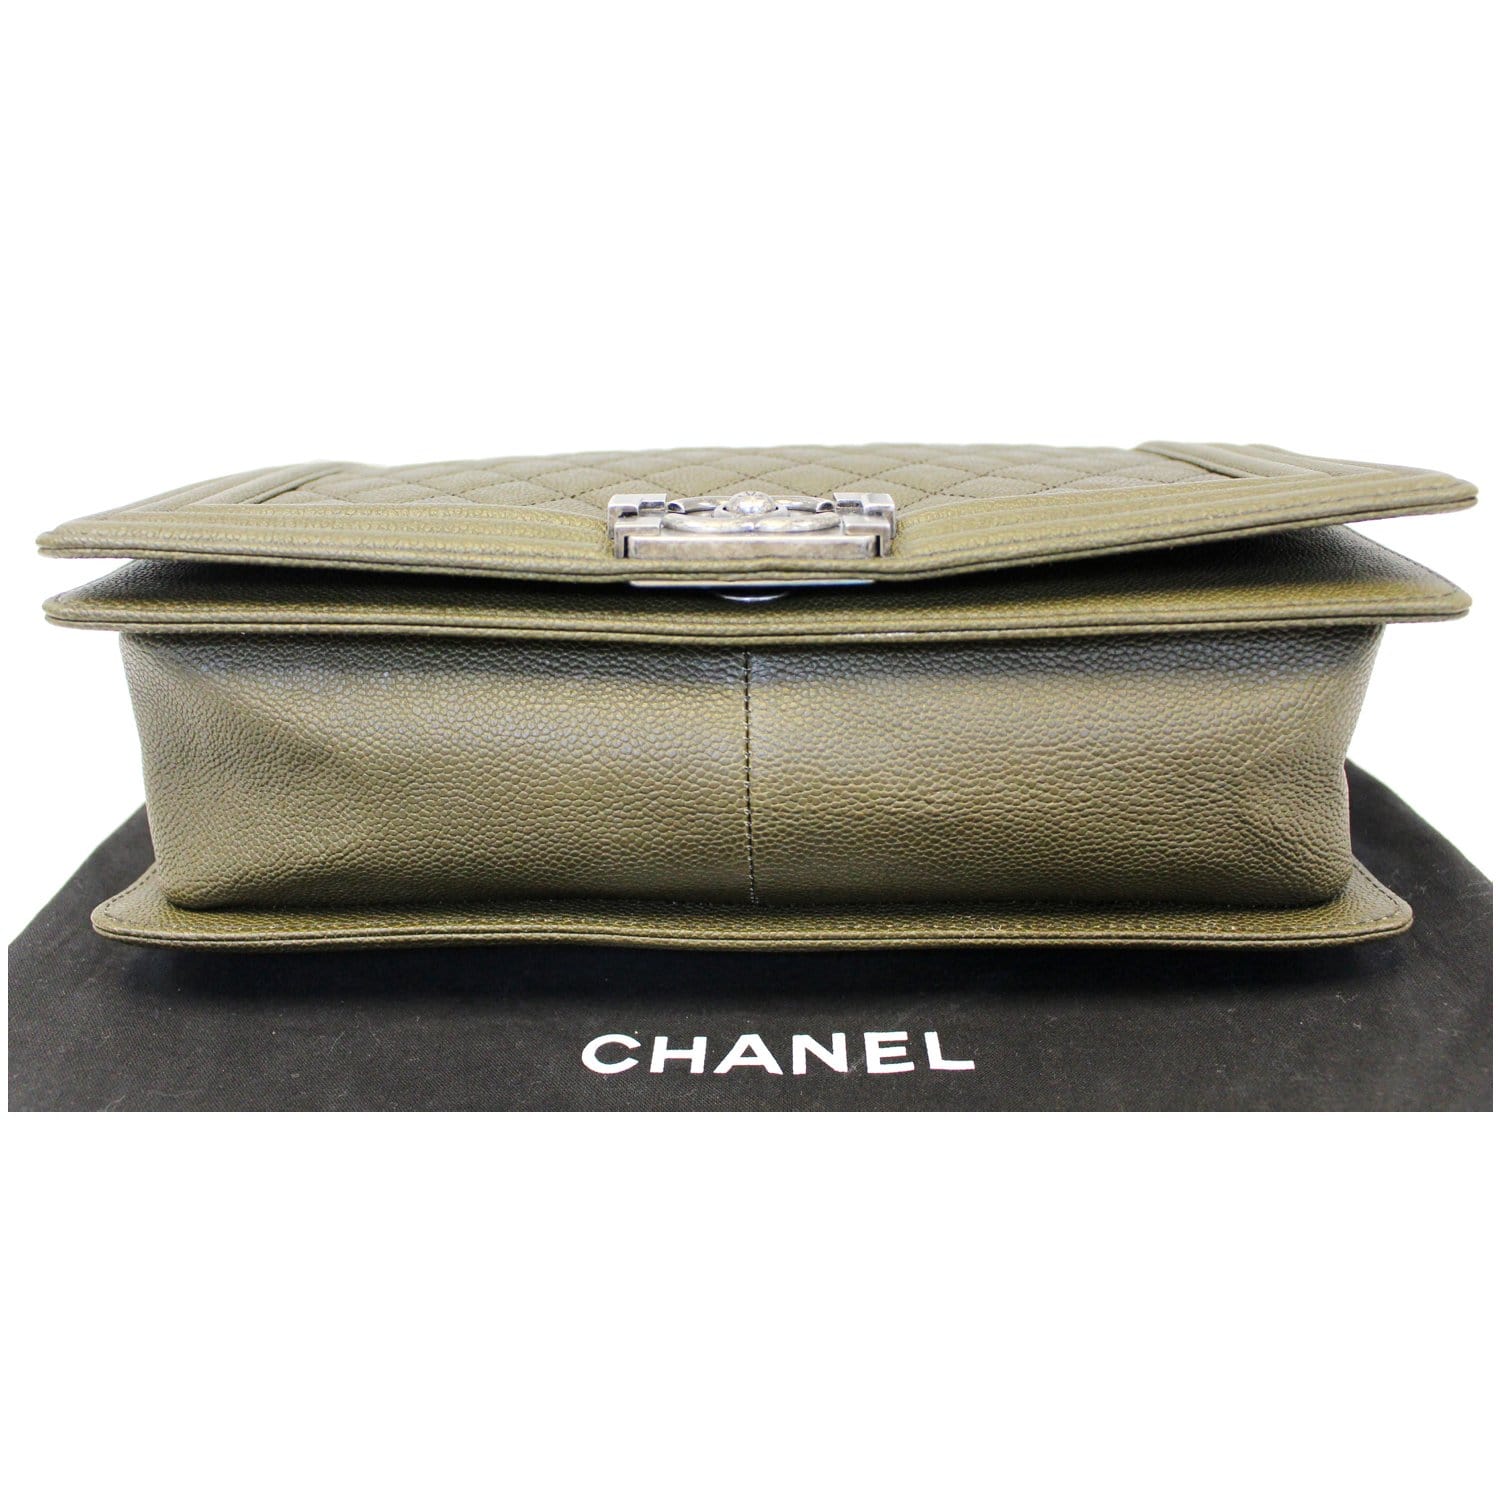 Chanel Boy Medium Leather Shoulder Bag - Chanel Flap